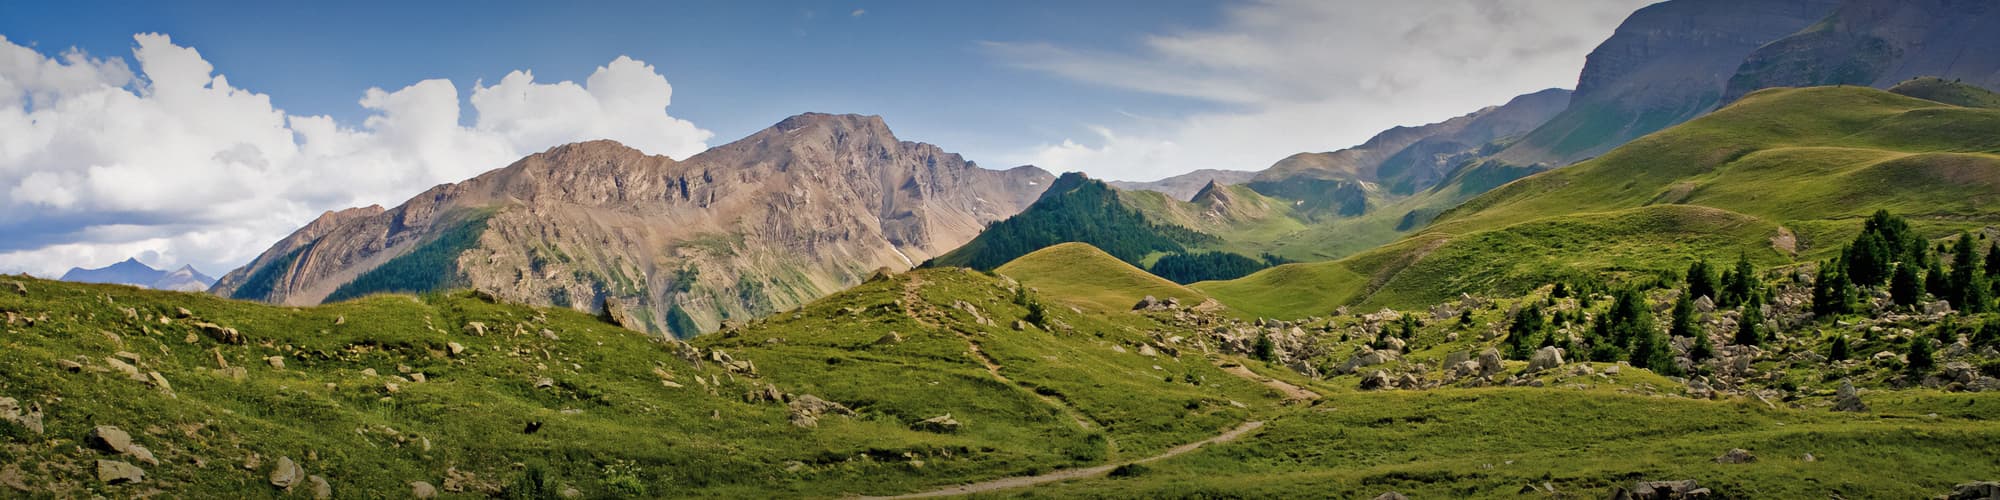 Randonnée avec âne Alpes du Sud © Uolir / Adobe Stock